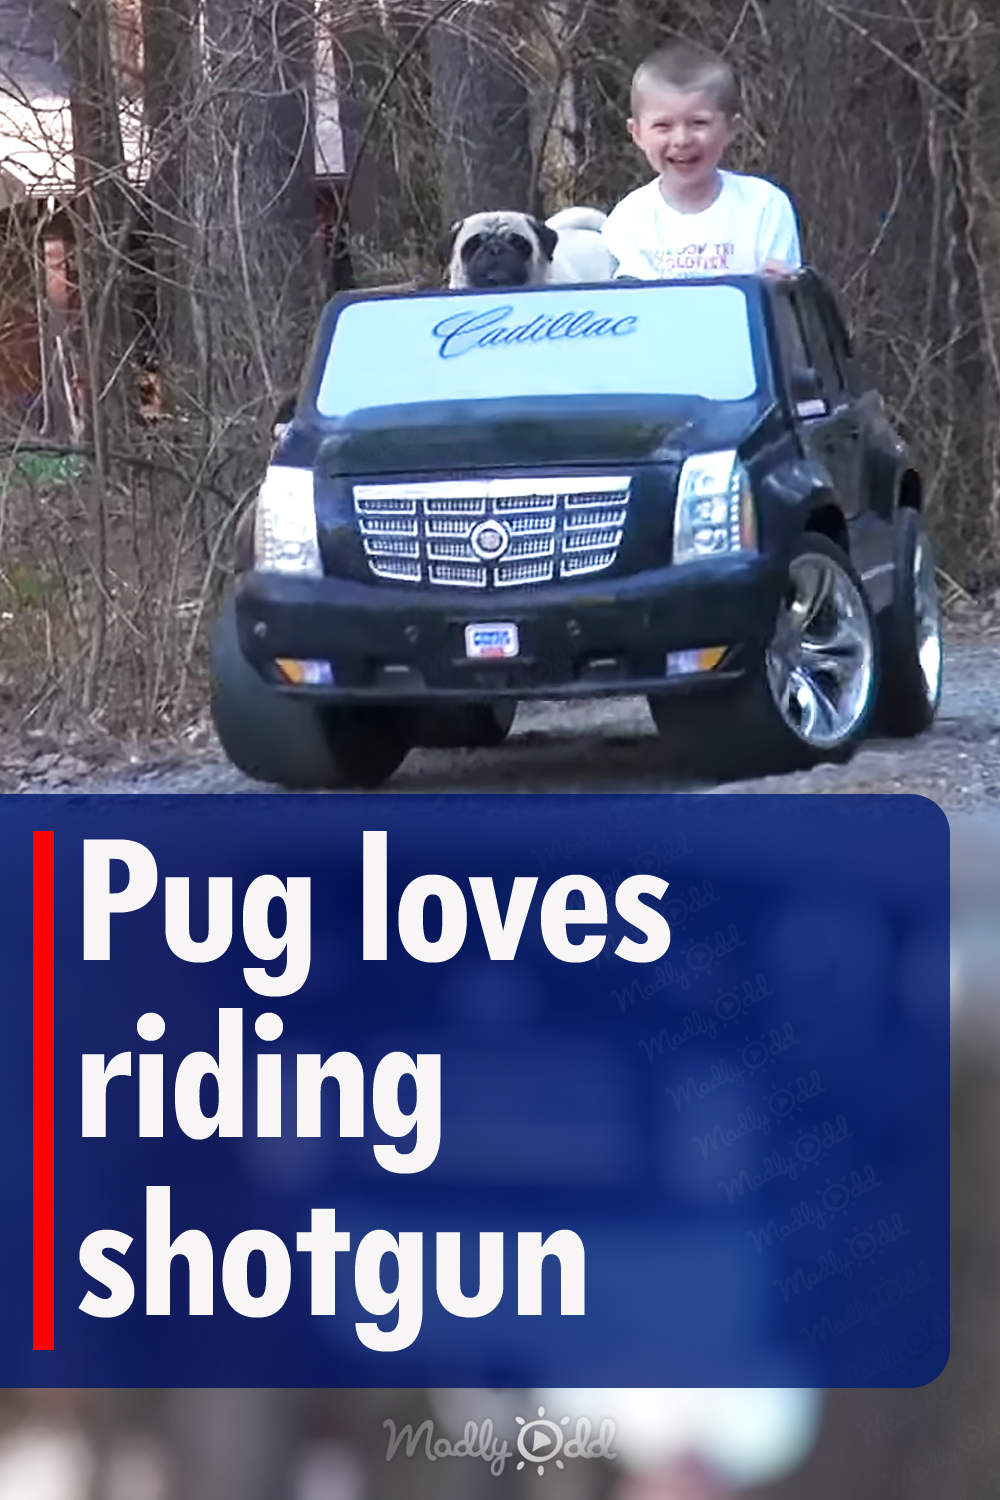 Pug loves riding shotgun